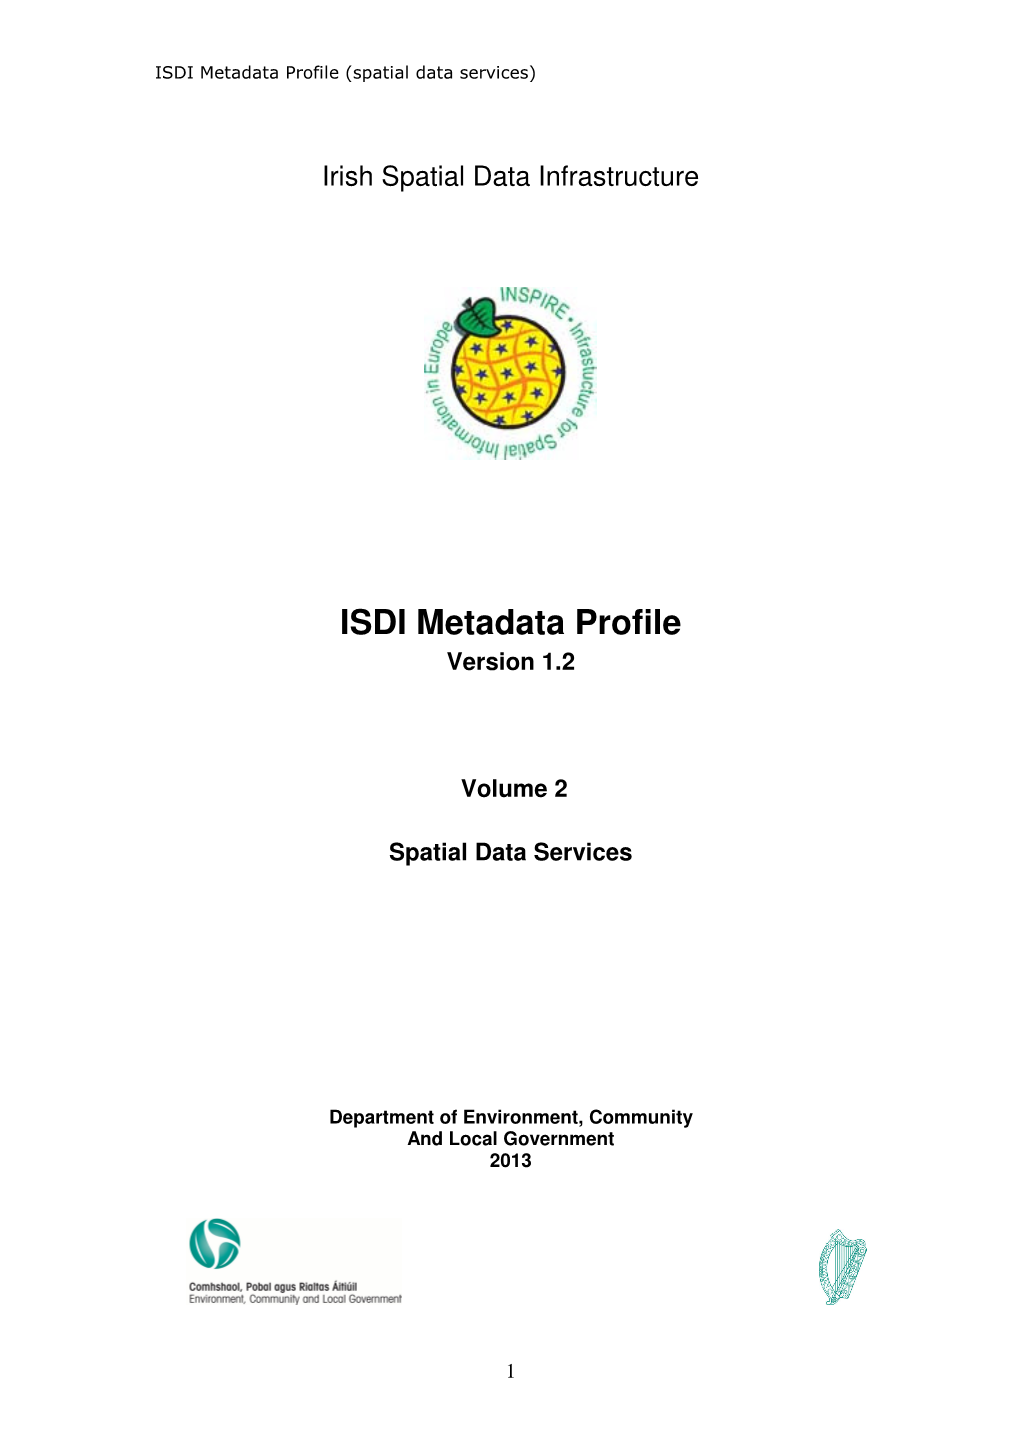 ISDI Metadata Profile Volume 2